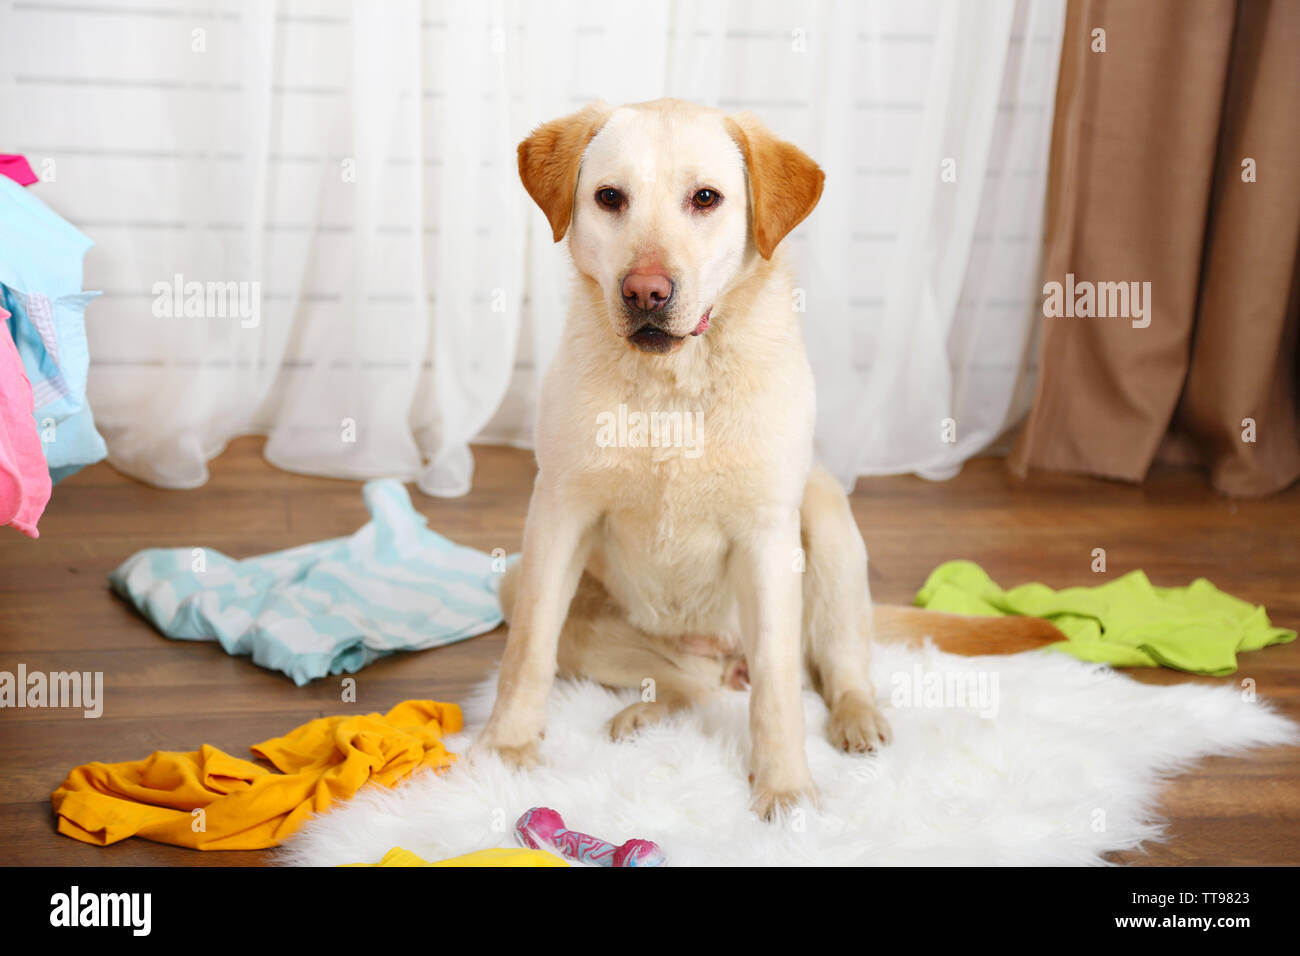 Dog in messy room Stock Photo